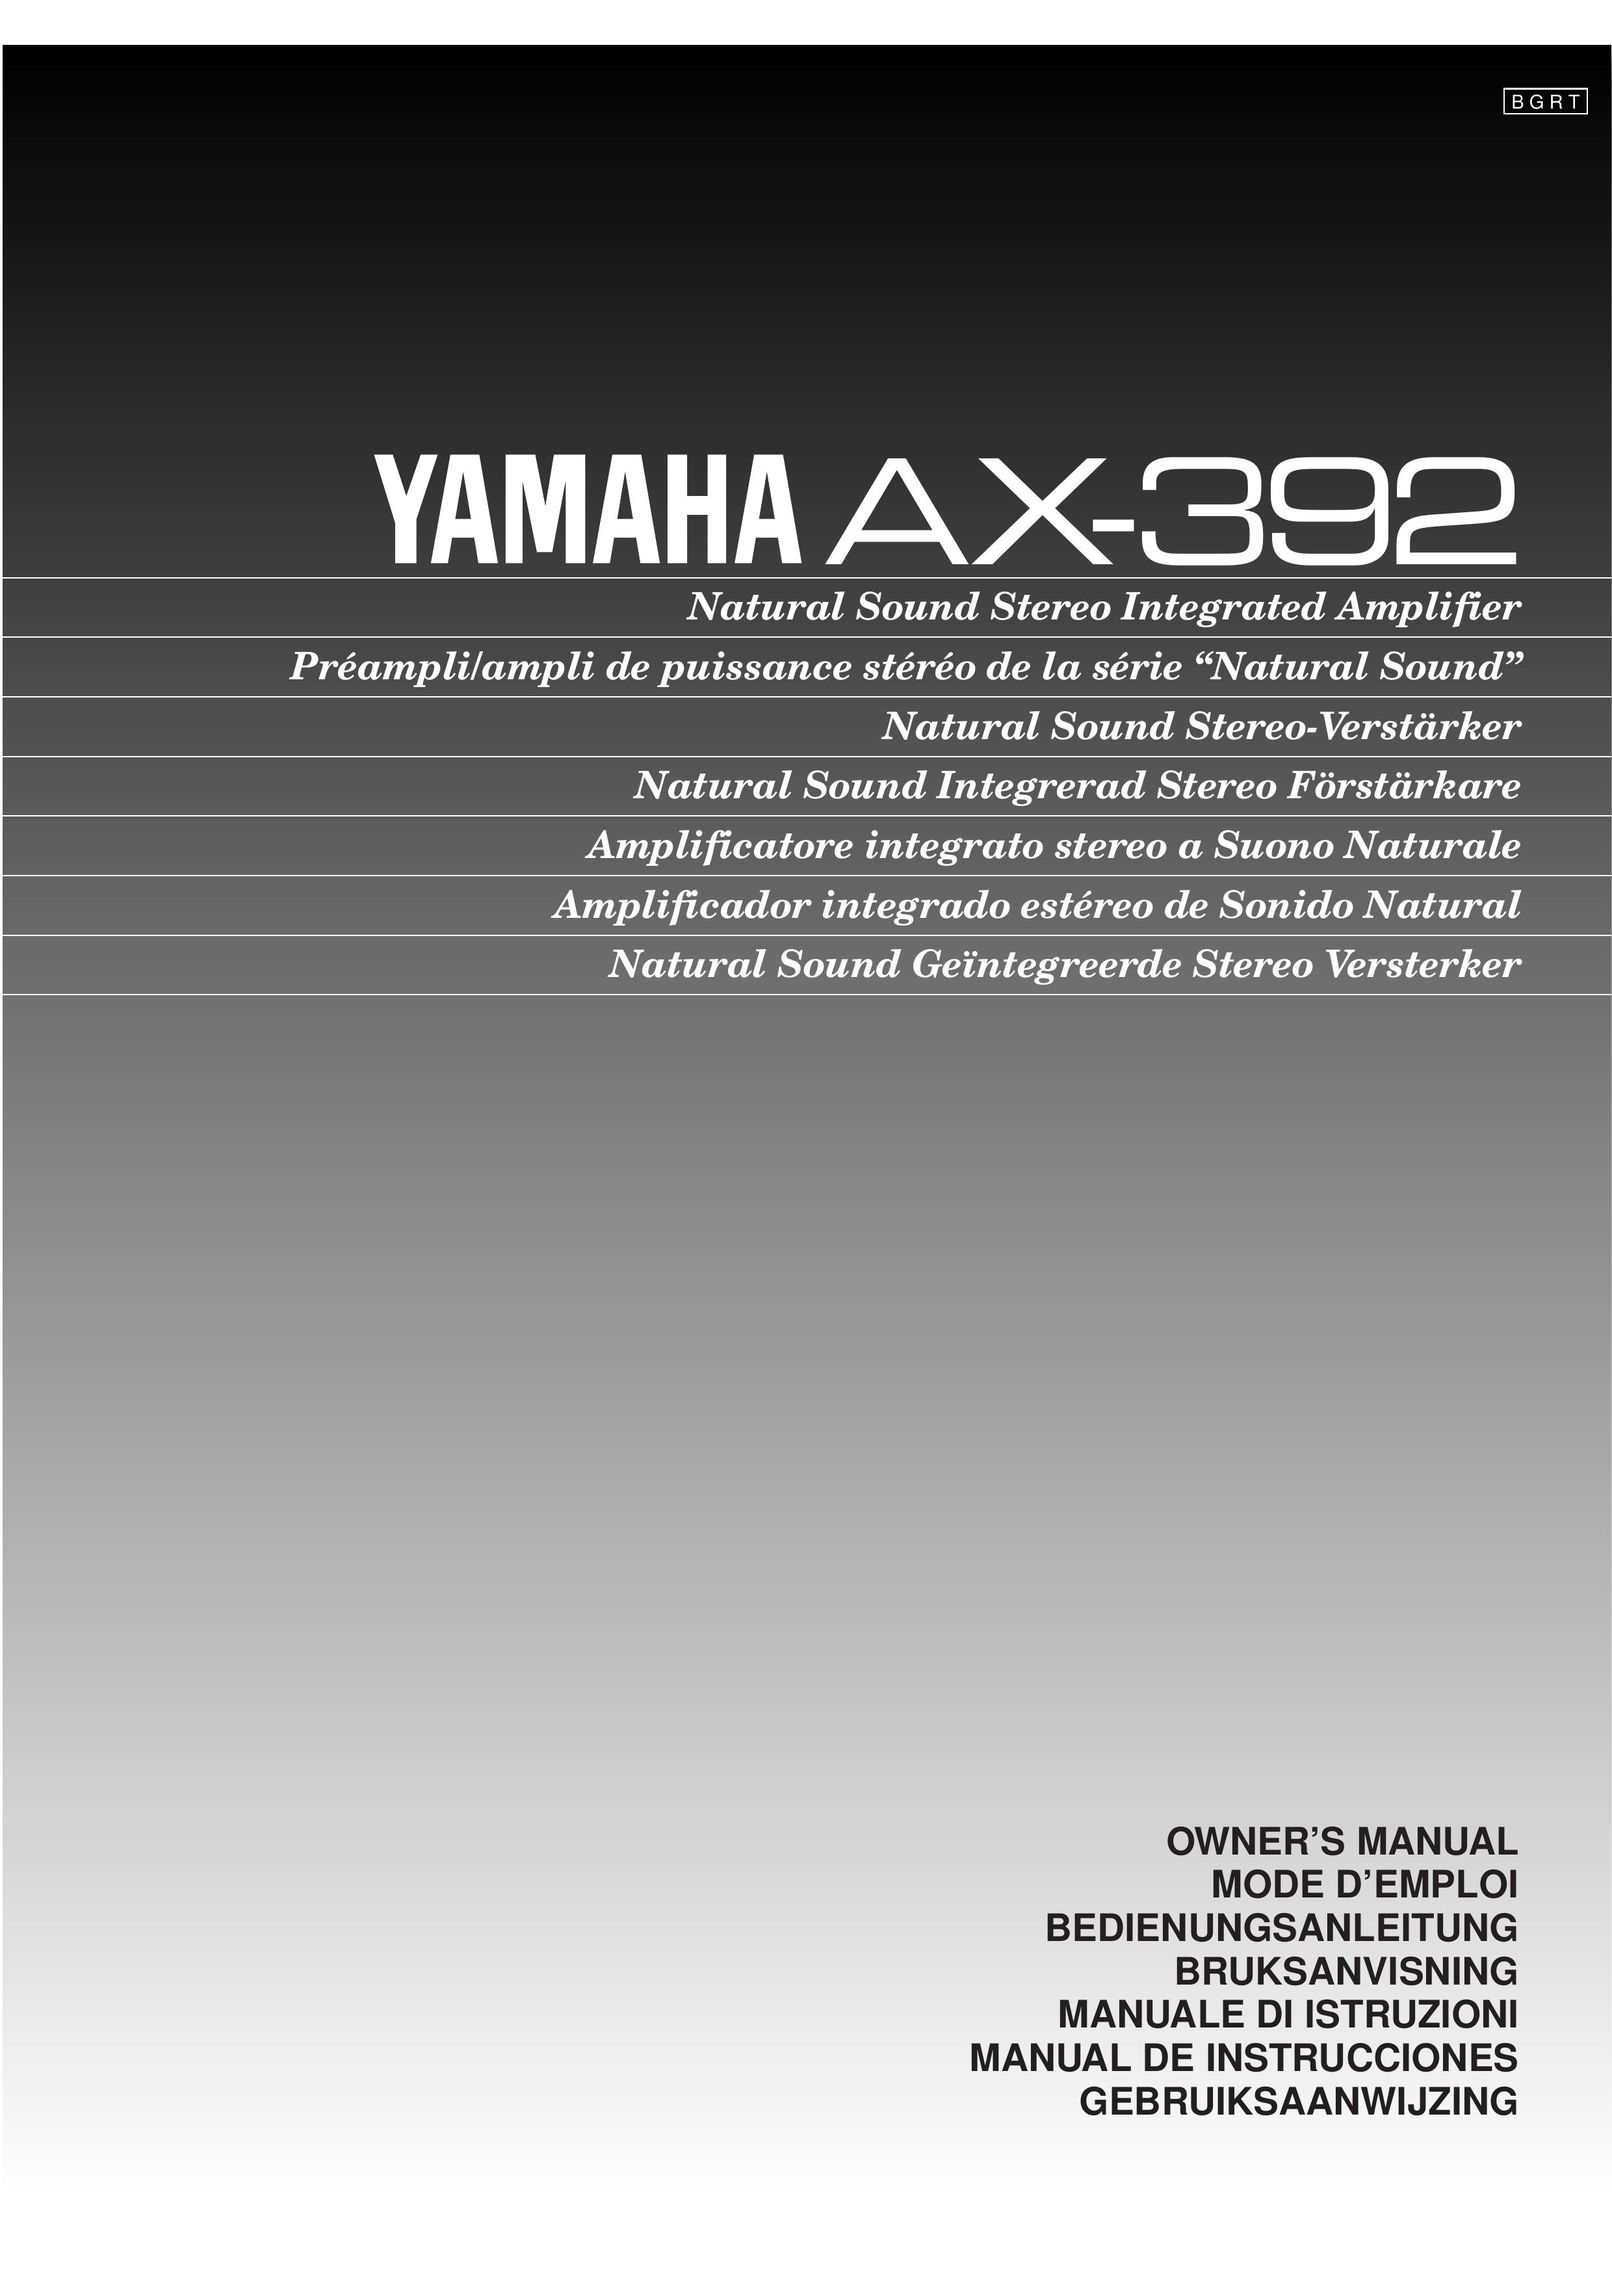 Yamaha AX-392 Stereo Amplifier User Manual